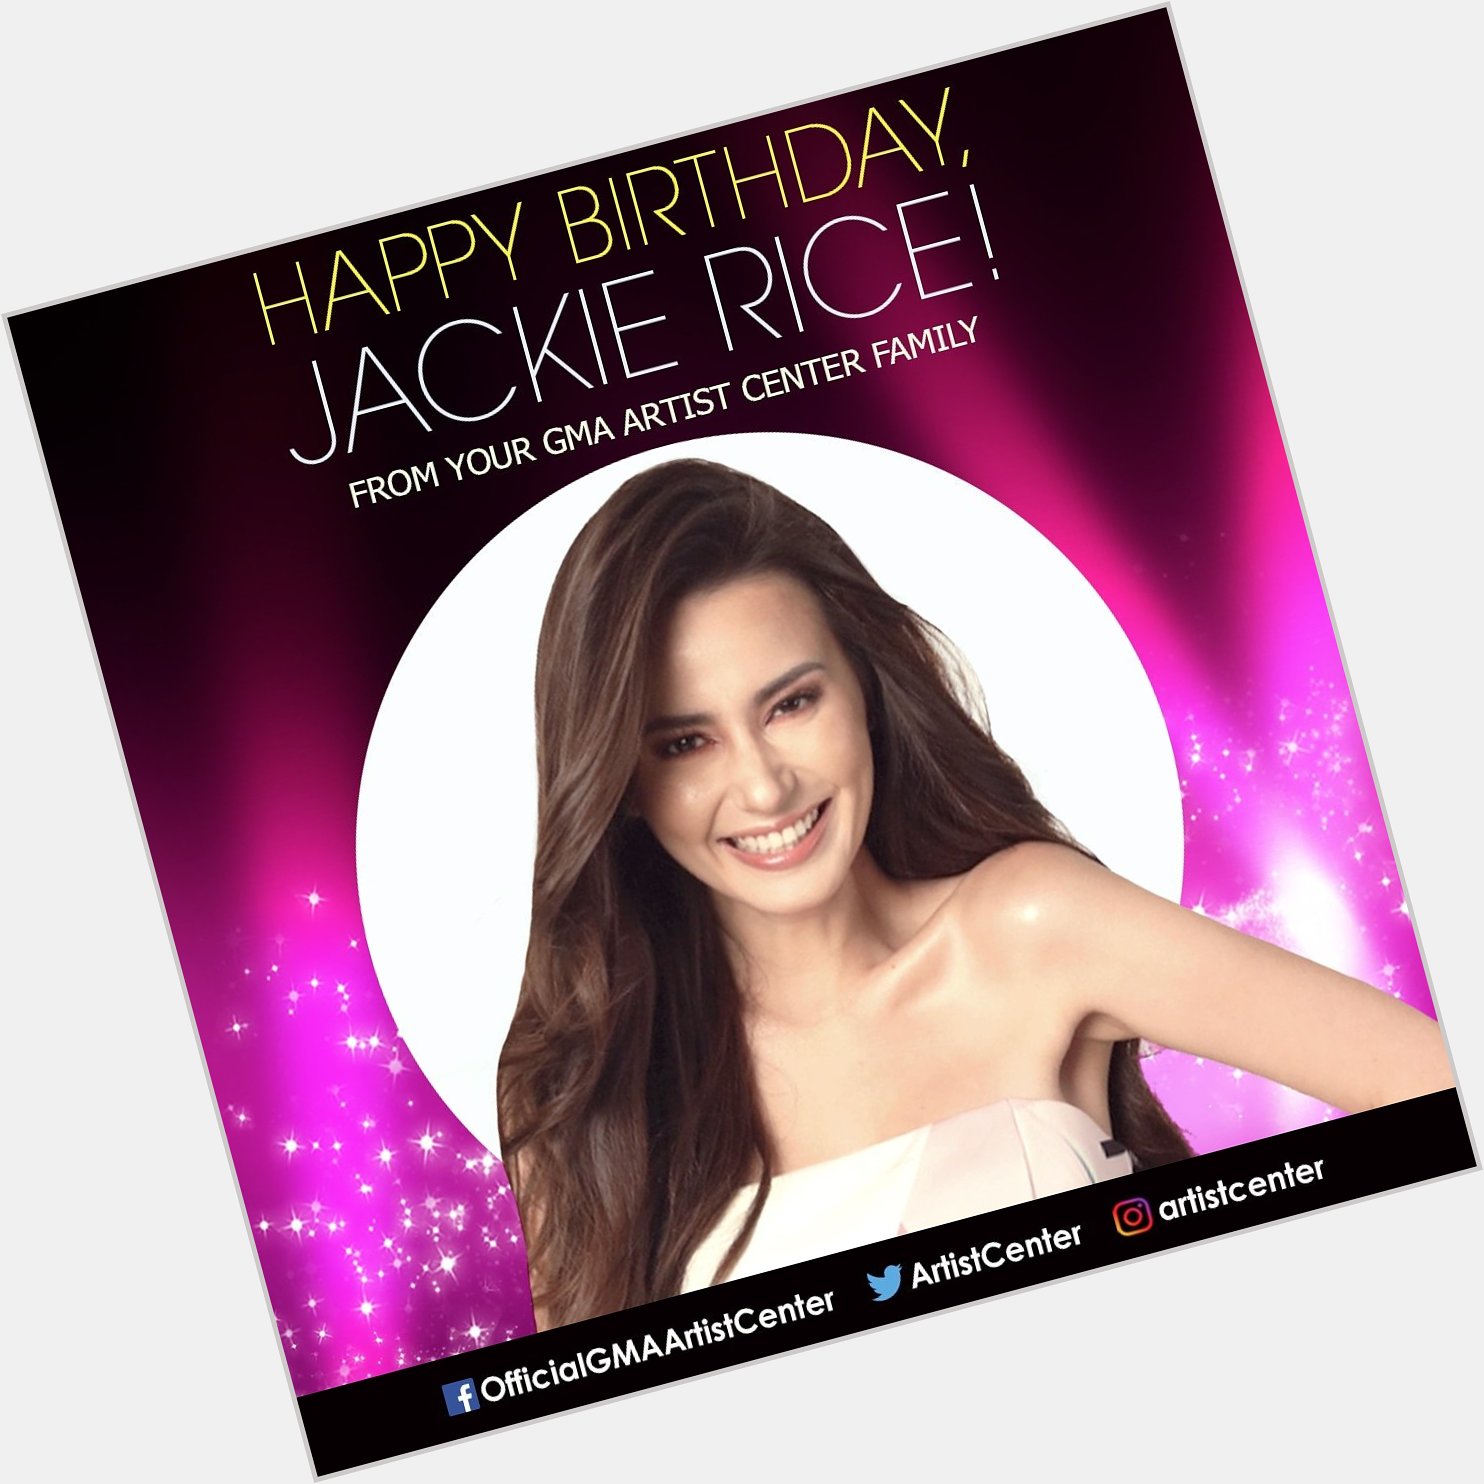 Happy Birthday Jackie Rice! 